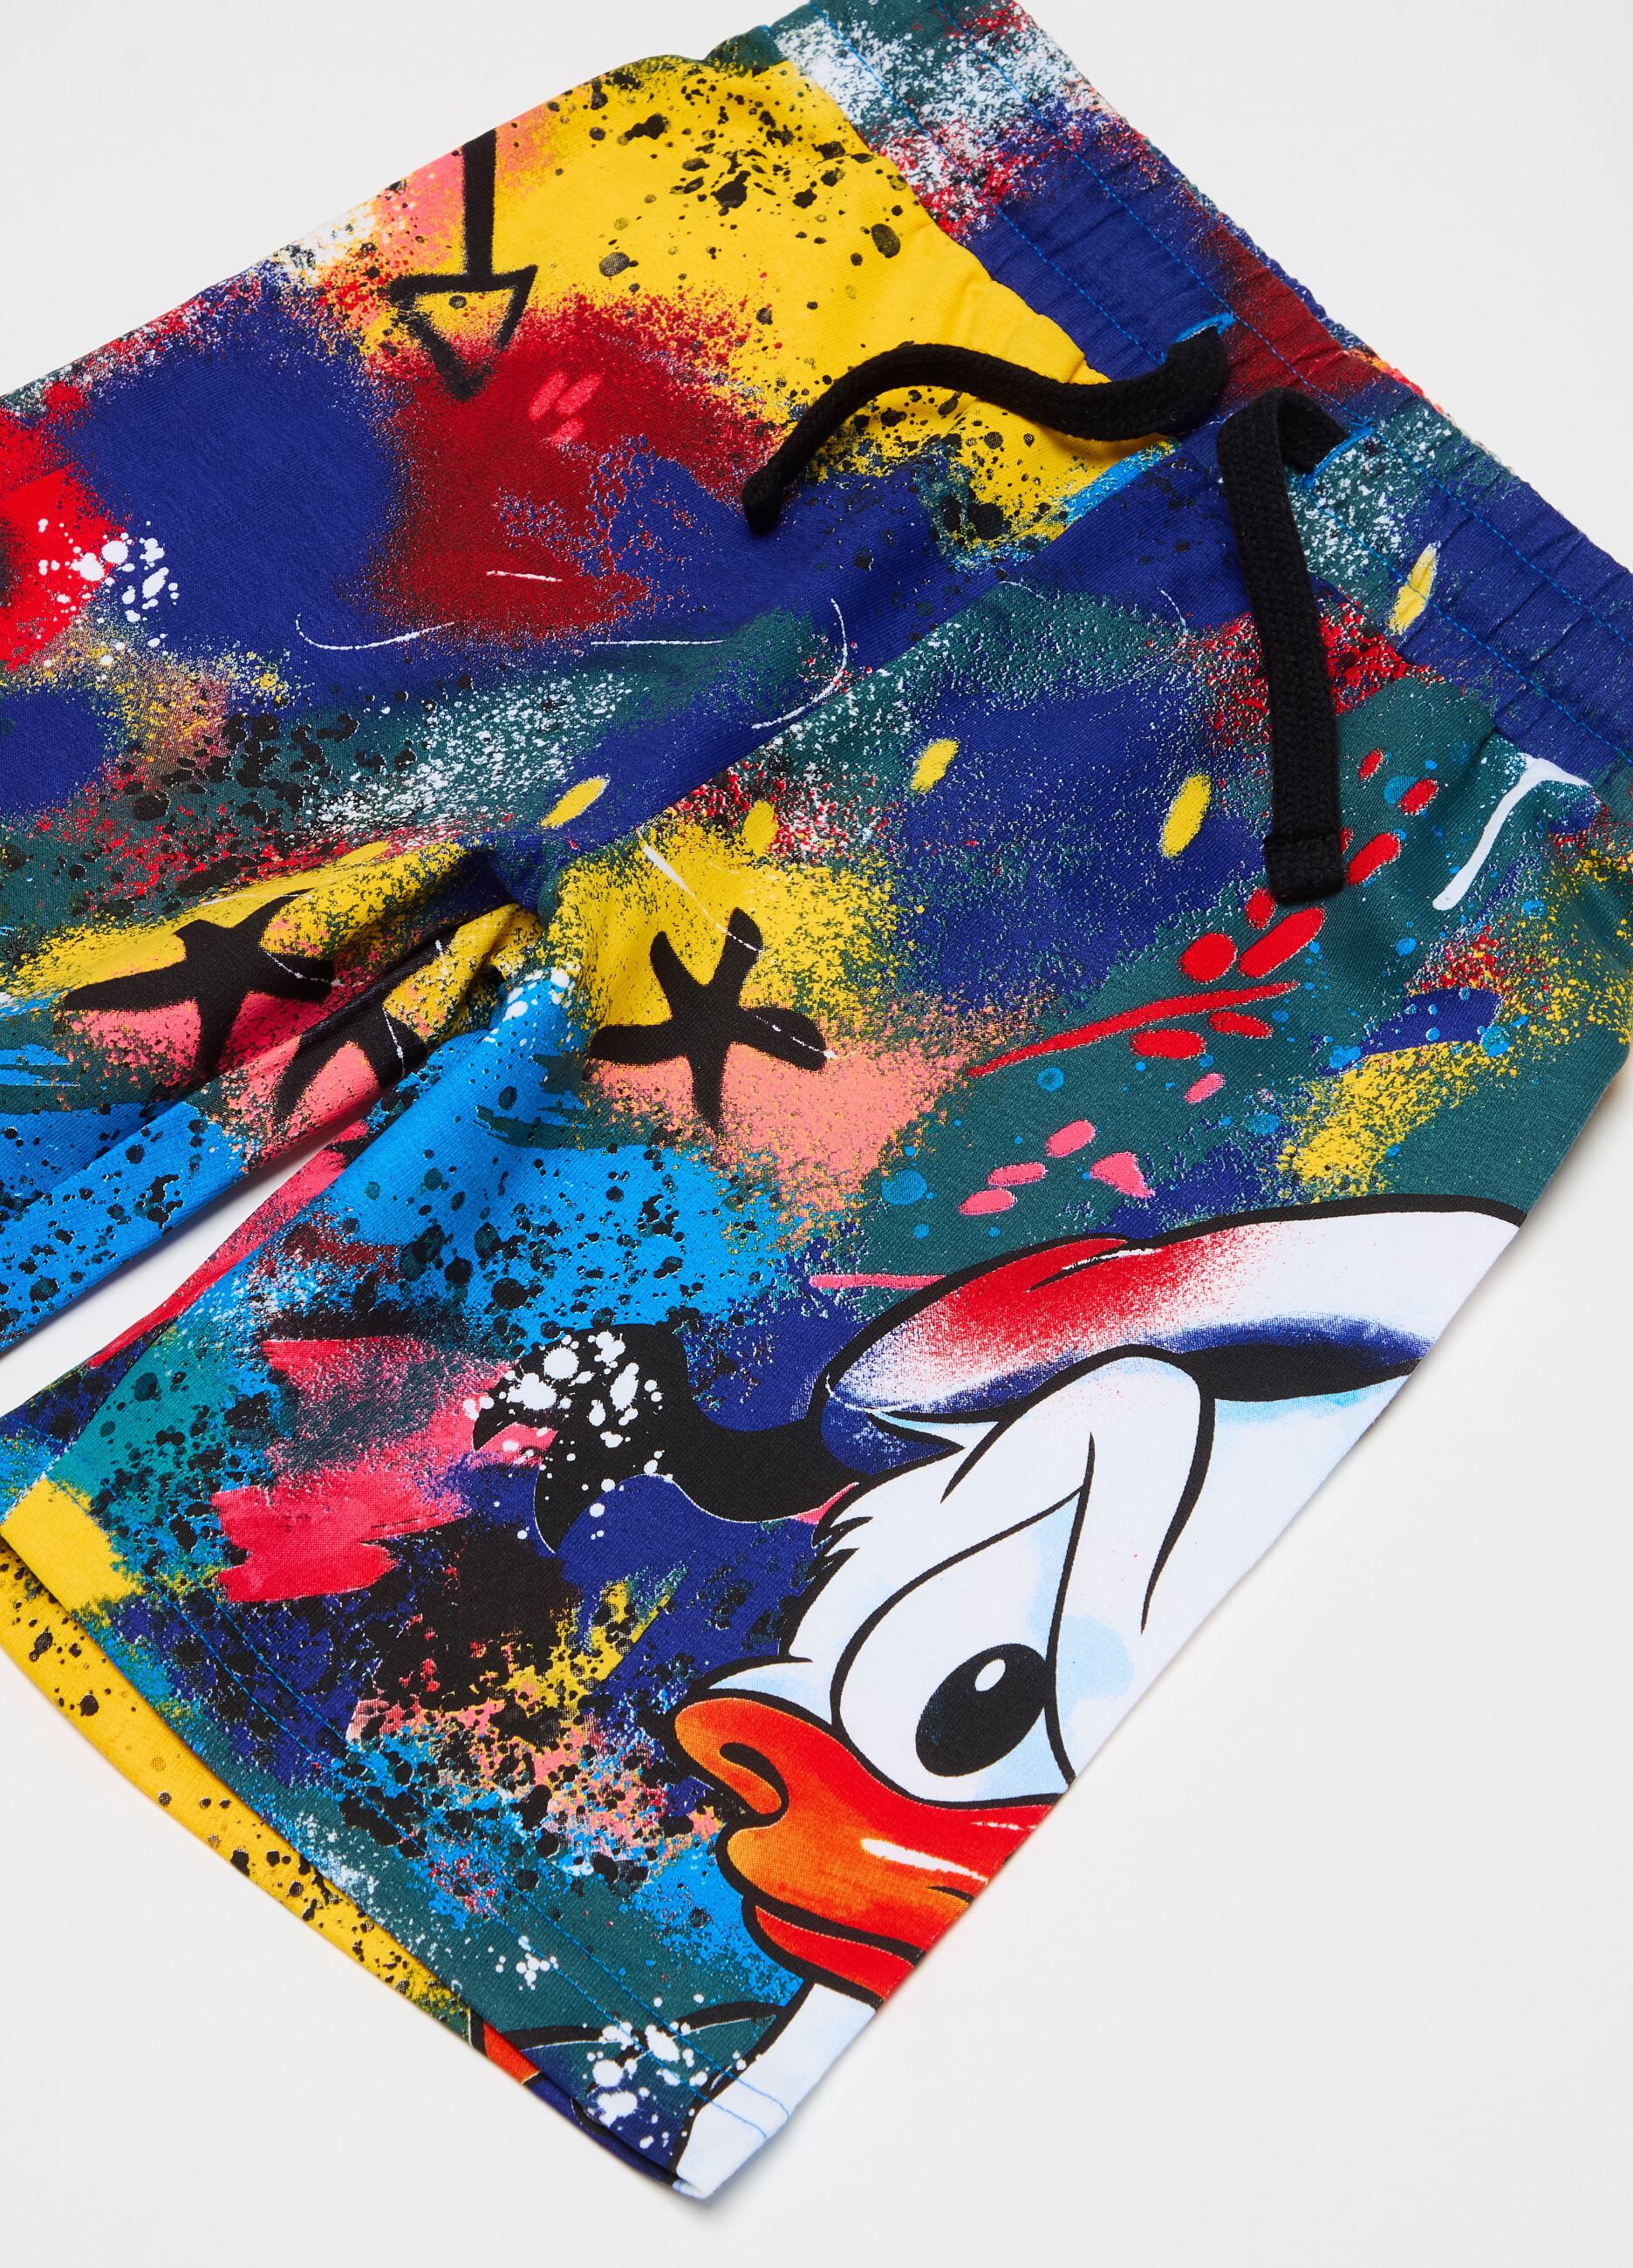 Fleece Bermuda shorts with Donald Duck 90 print